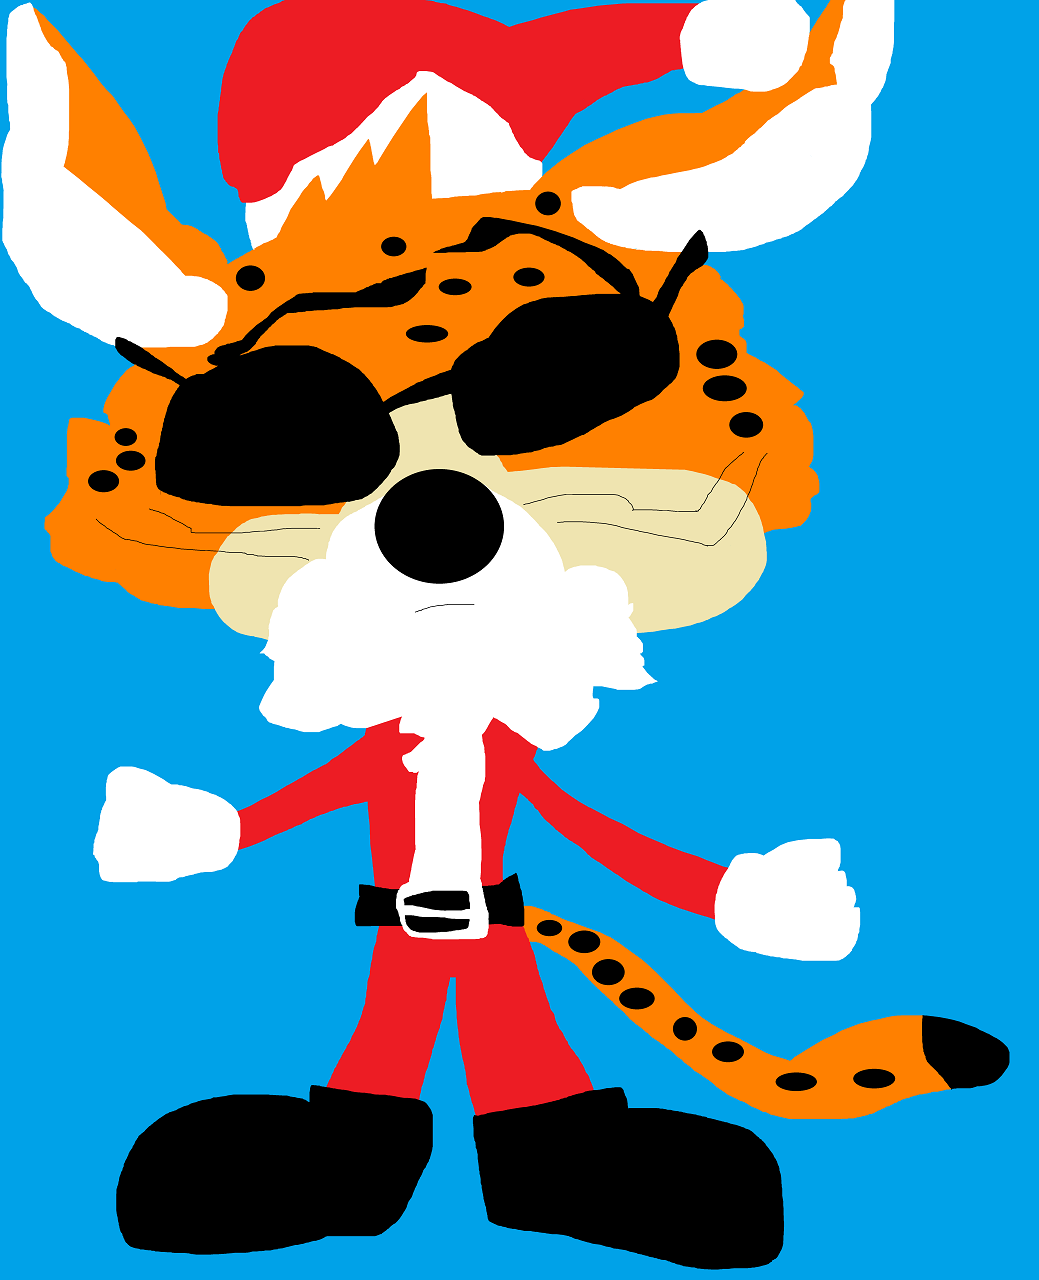 Early Christmas Chester Cheetah by Falconlobo